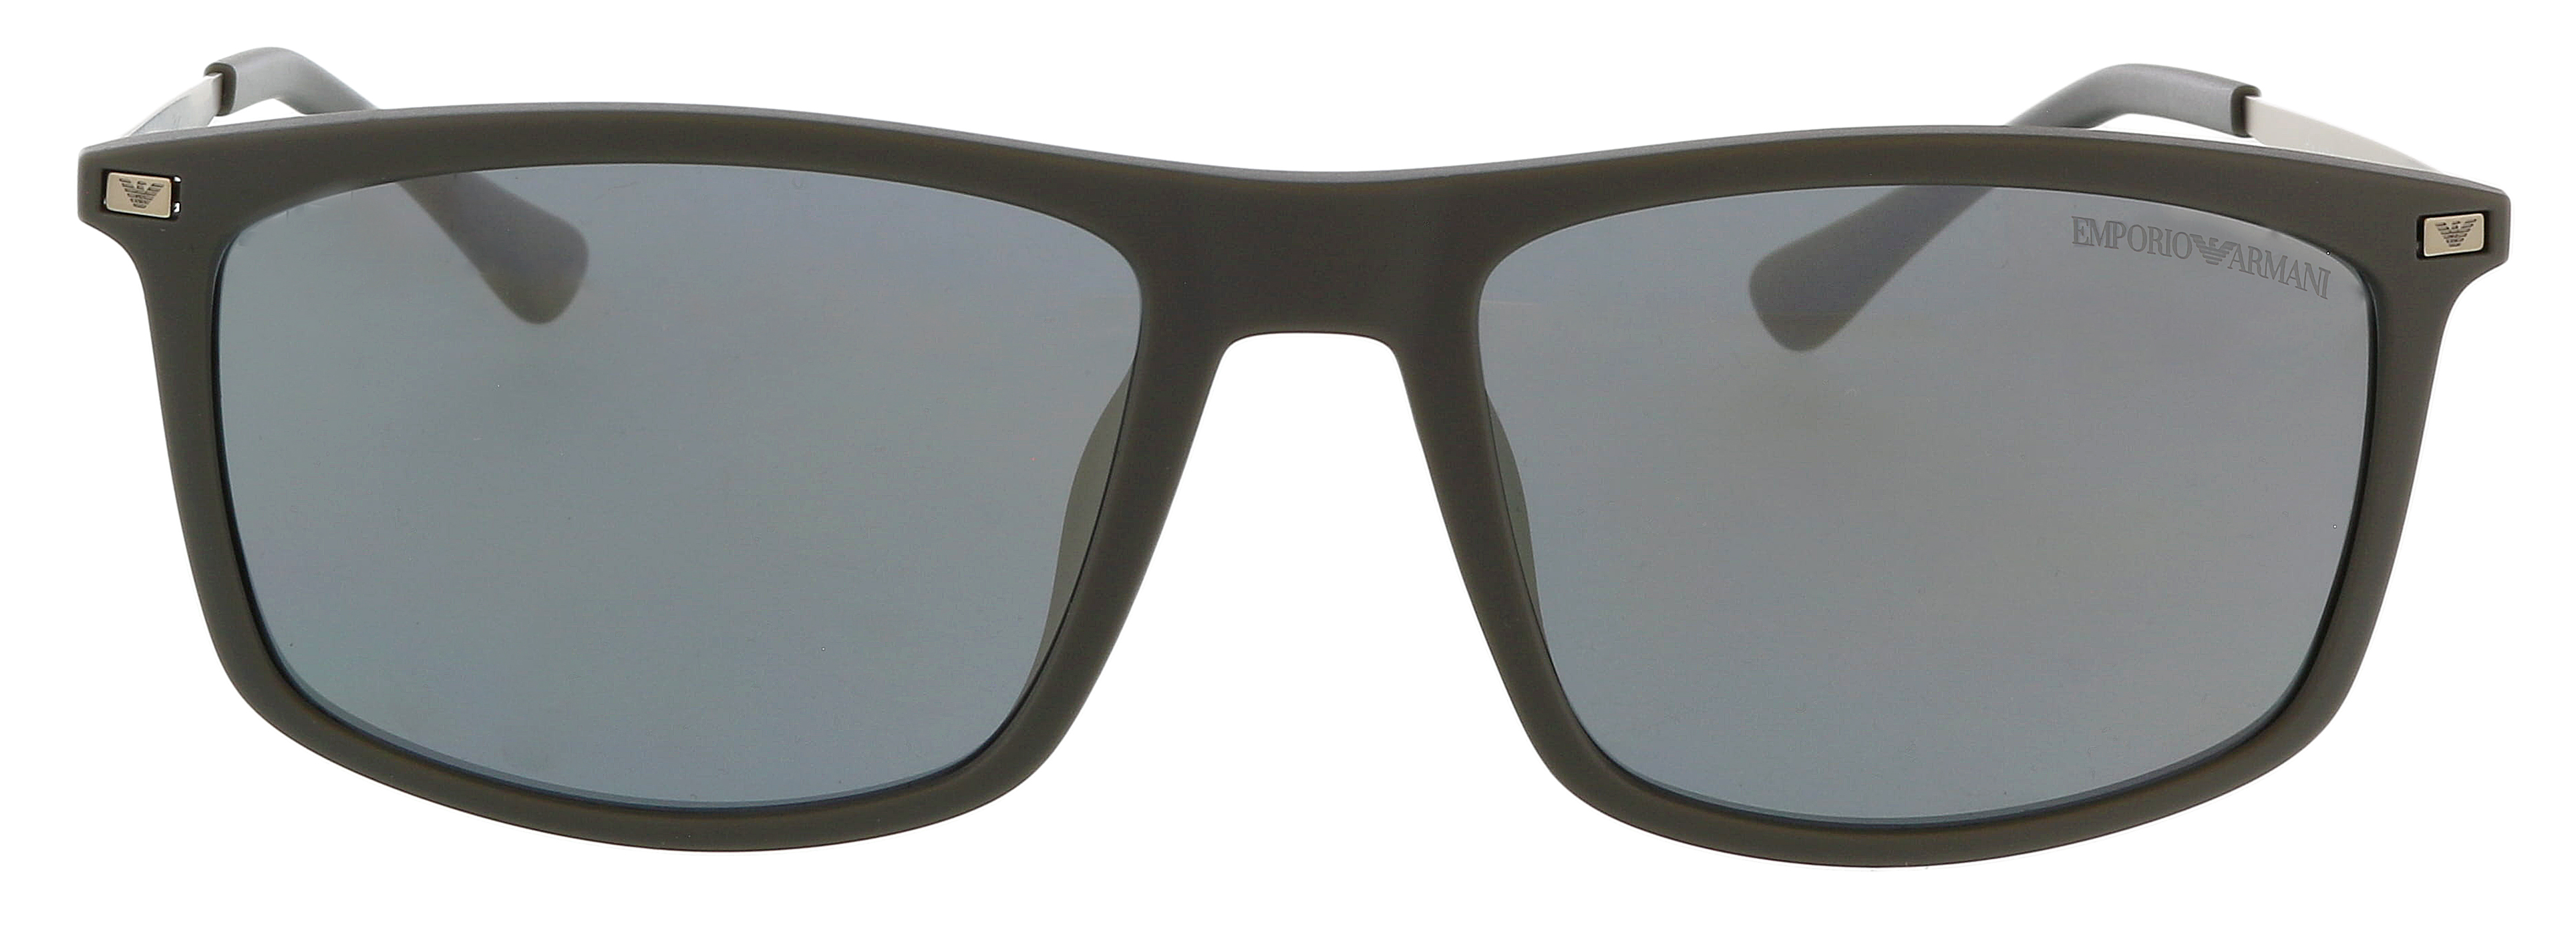 Sunglasses Emporio Armani EA 4171 U 54376G Matte Grey - image 2 of 5